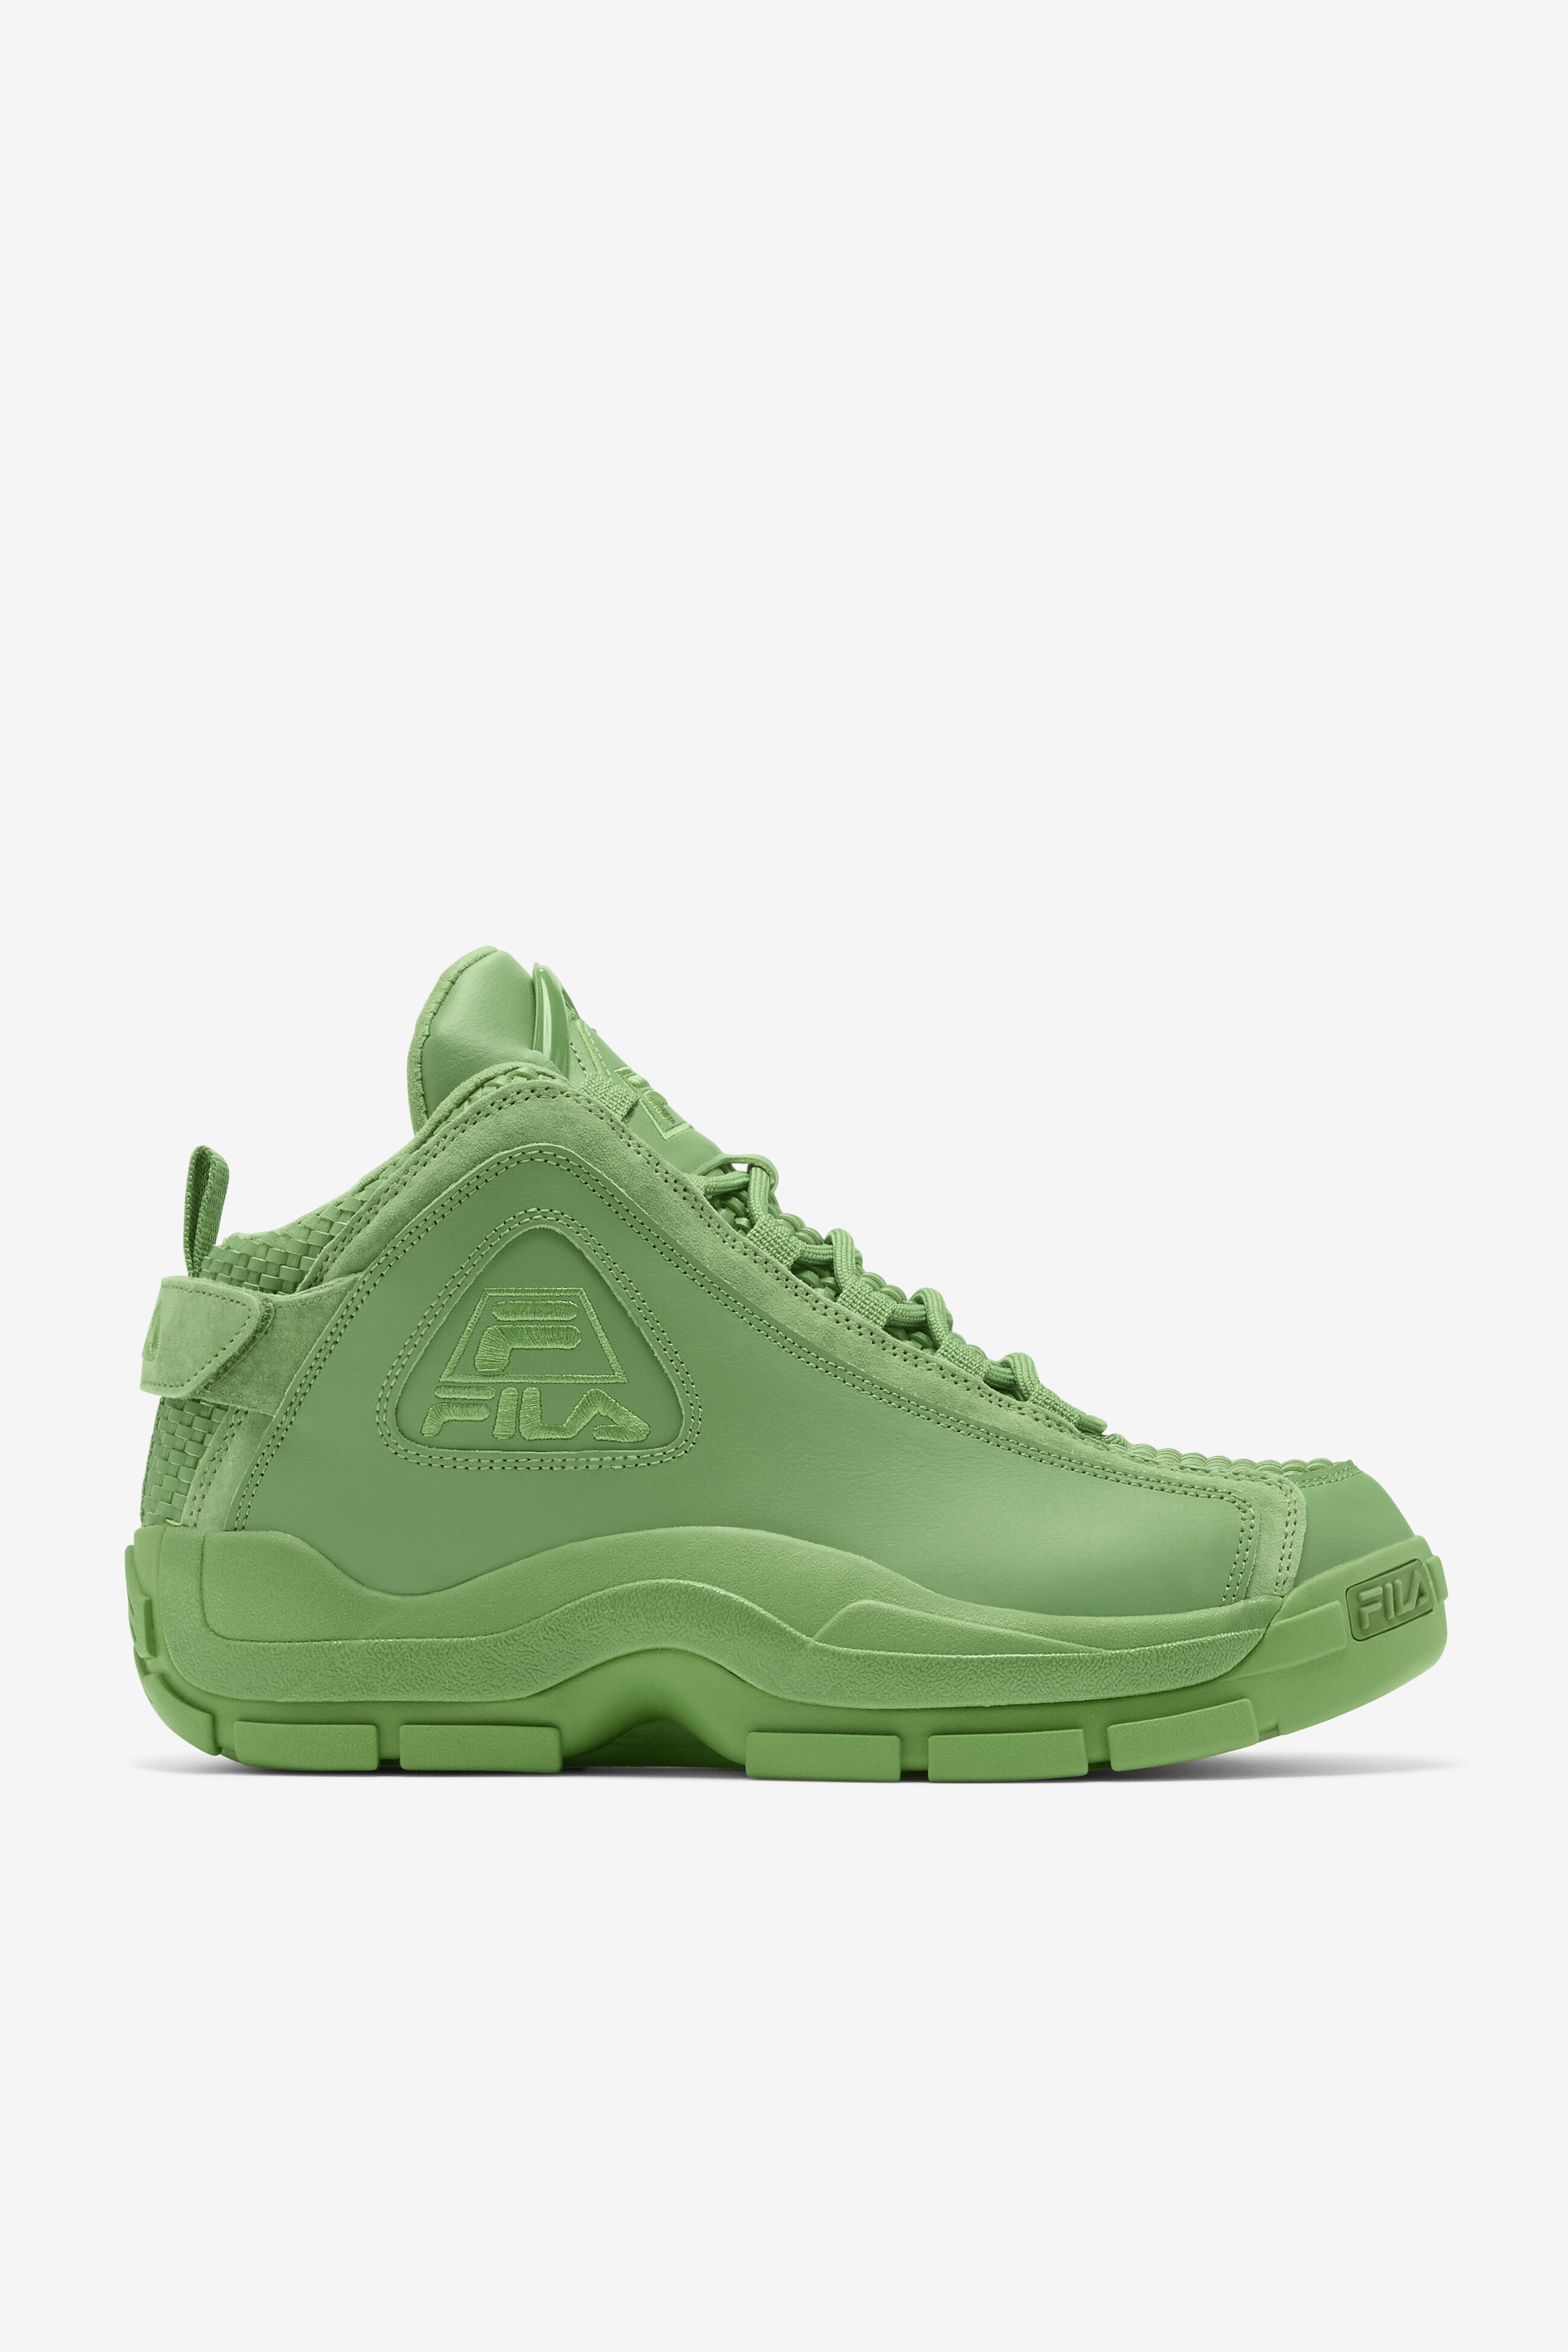 Grant Hill 2 Woven Green Basketball Shoes | Fila 1BM01364